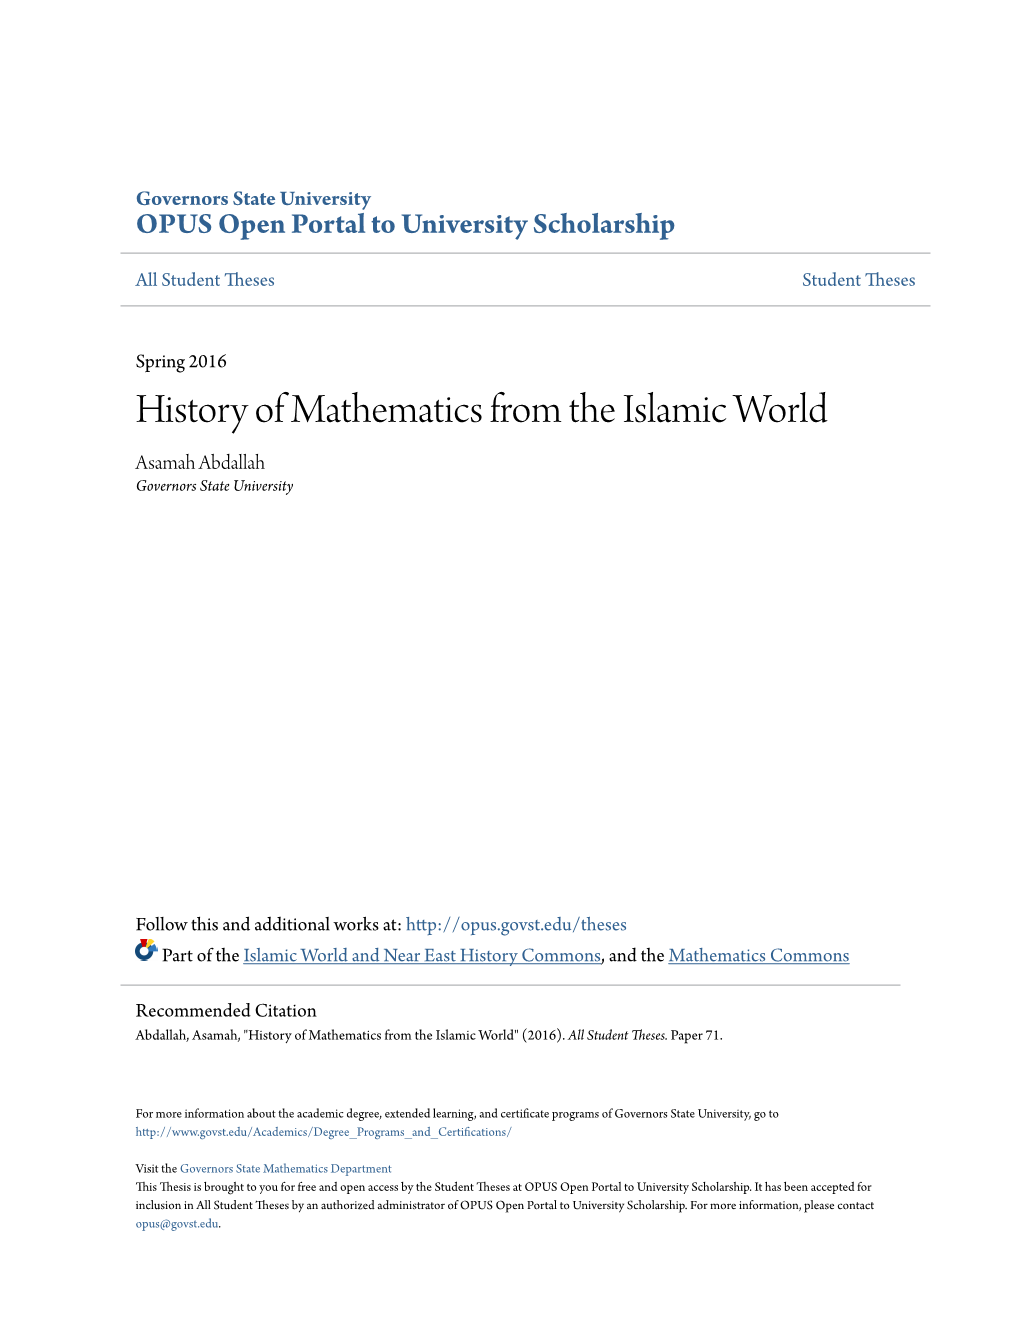 History of Mathematics from the Islamic World Asamah Abdallah Governors State University